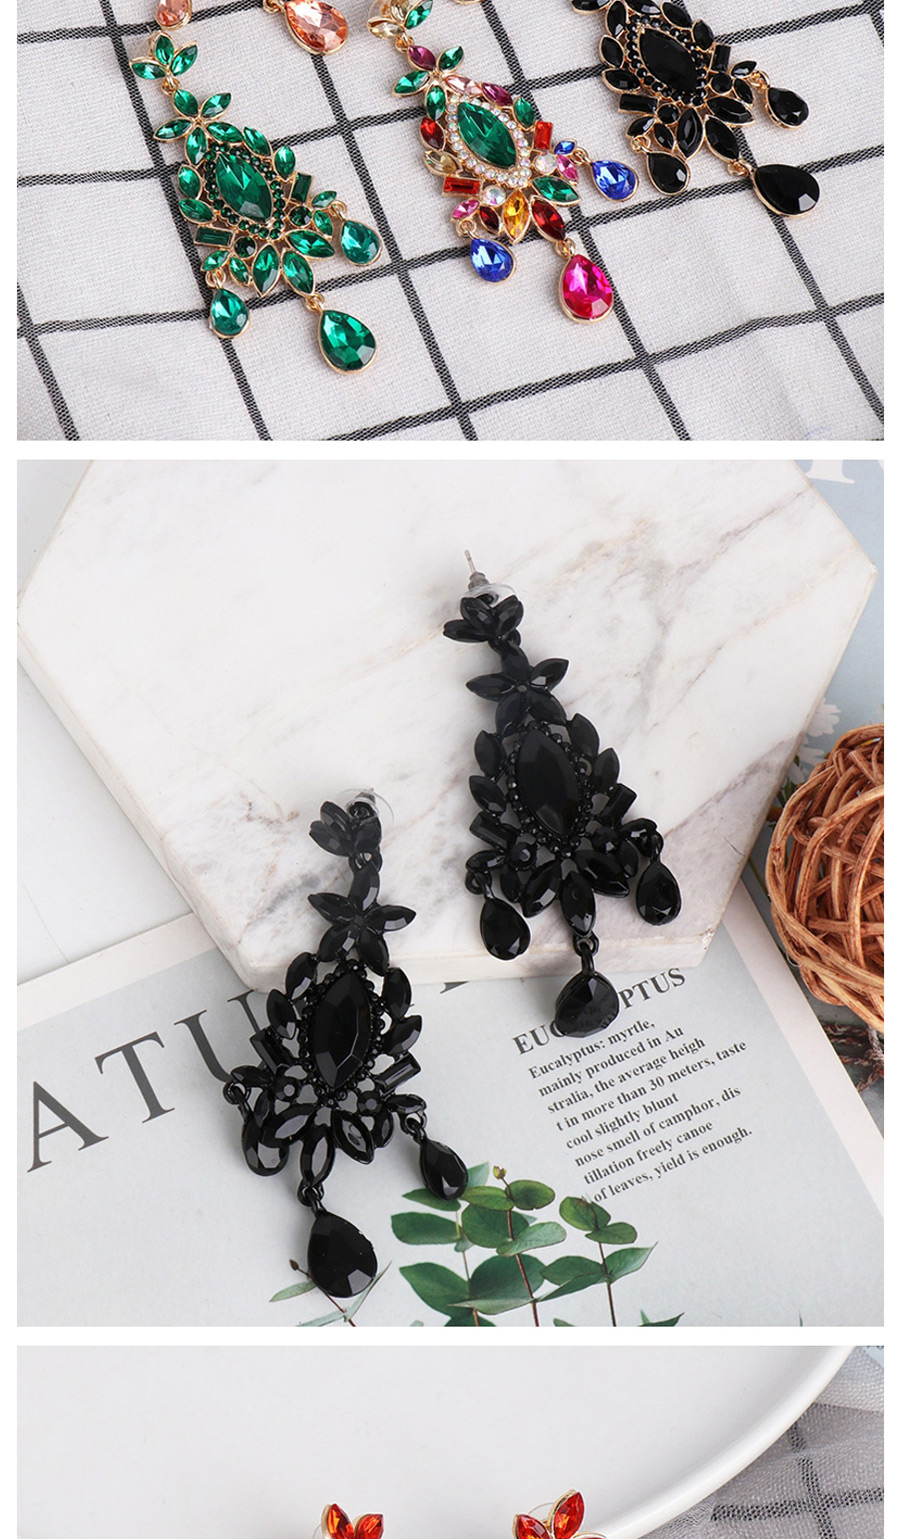 Fashion Gold + Black Geometric Drop Earrings With Diamonds And Flowers,Drop Earrings